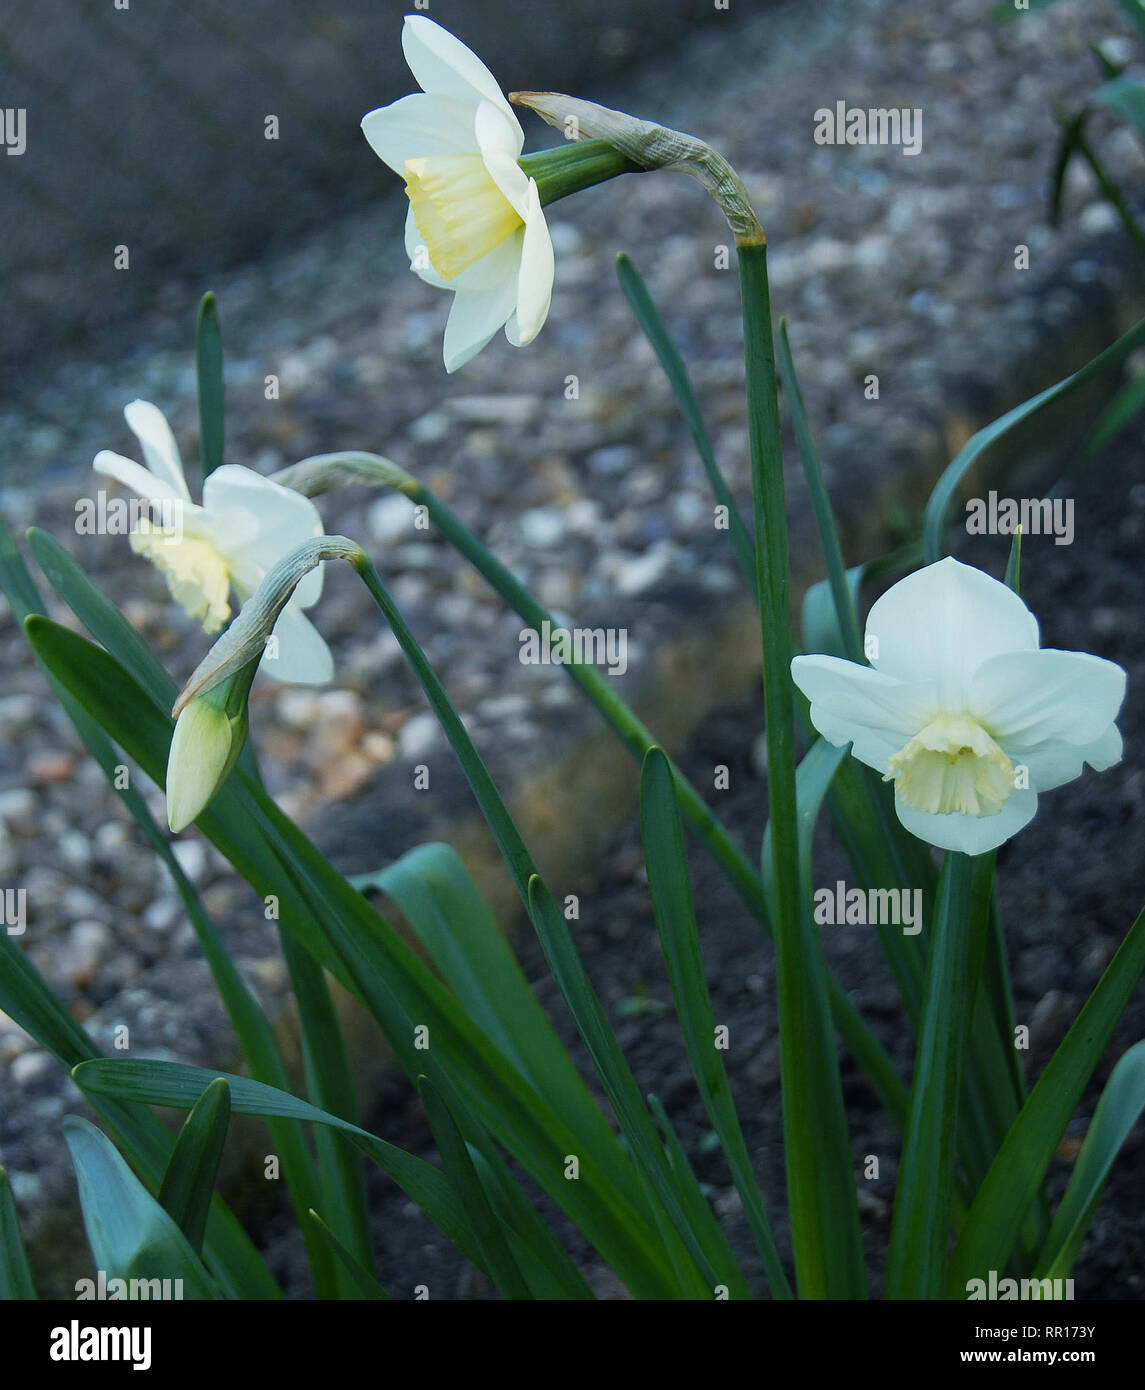 Narcissus Verona a cream small-cupped daffodil Stock Photo